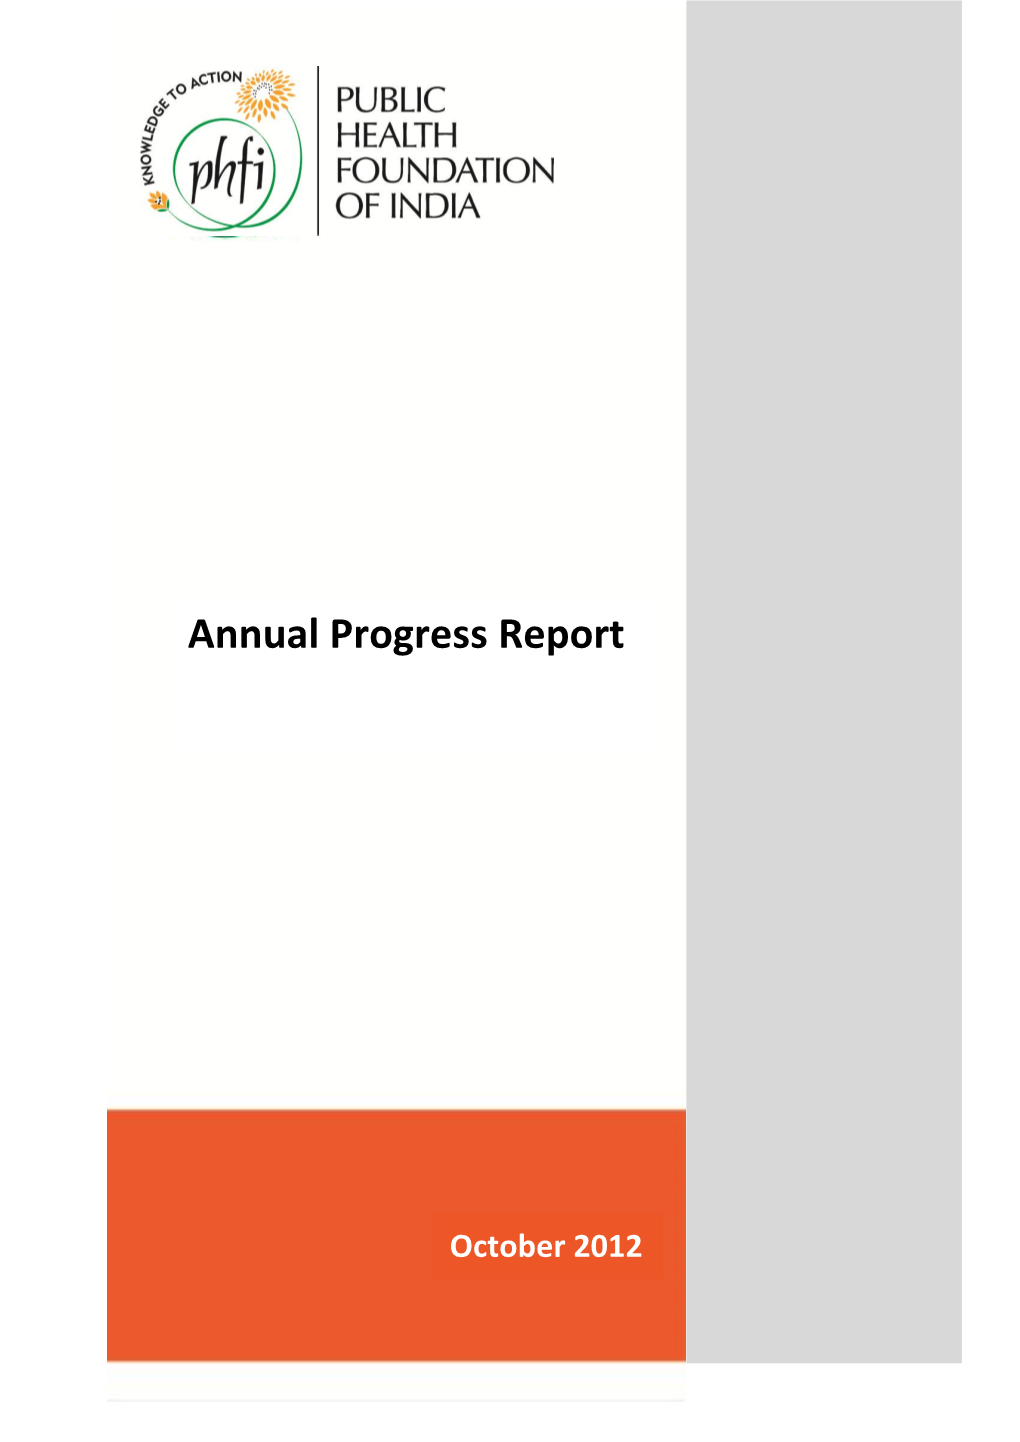 Annual Progress Report October 2011 – October 2012